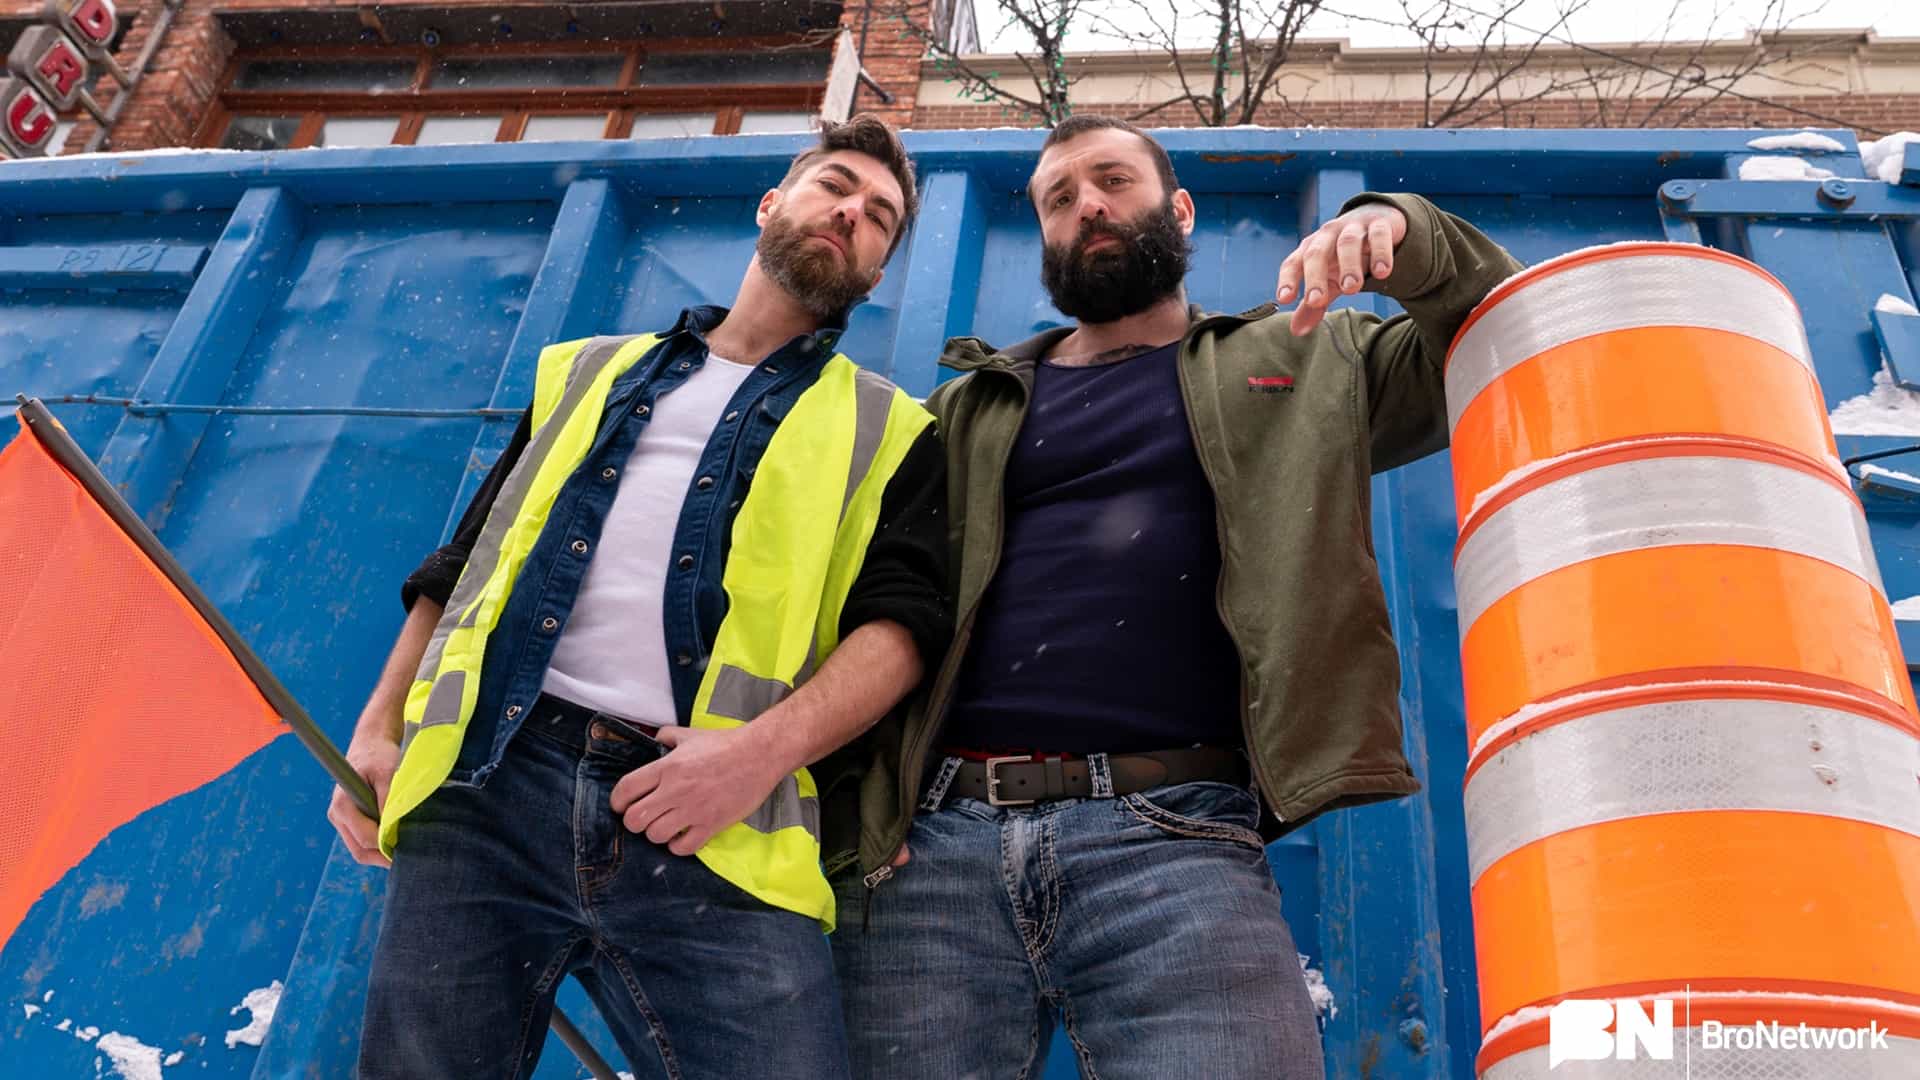 Tradesmen Attraction – Markus Kage and Matt